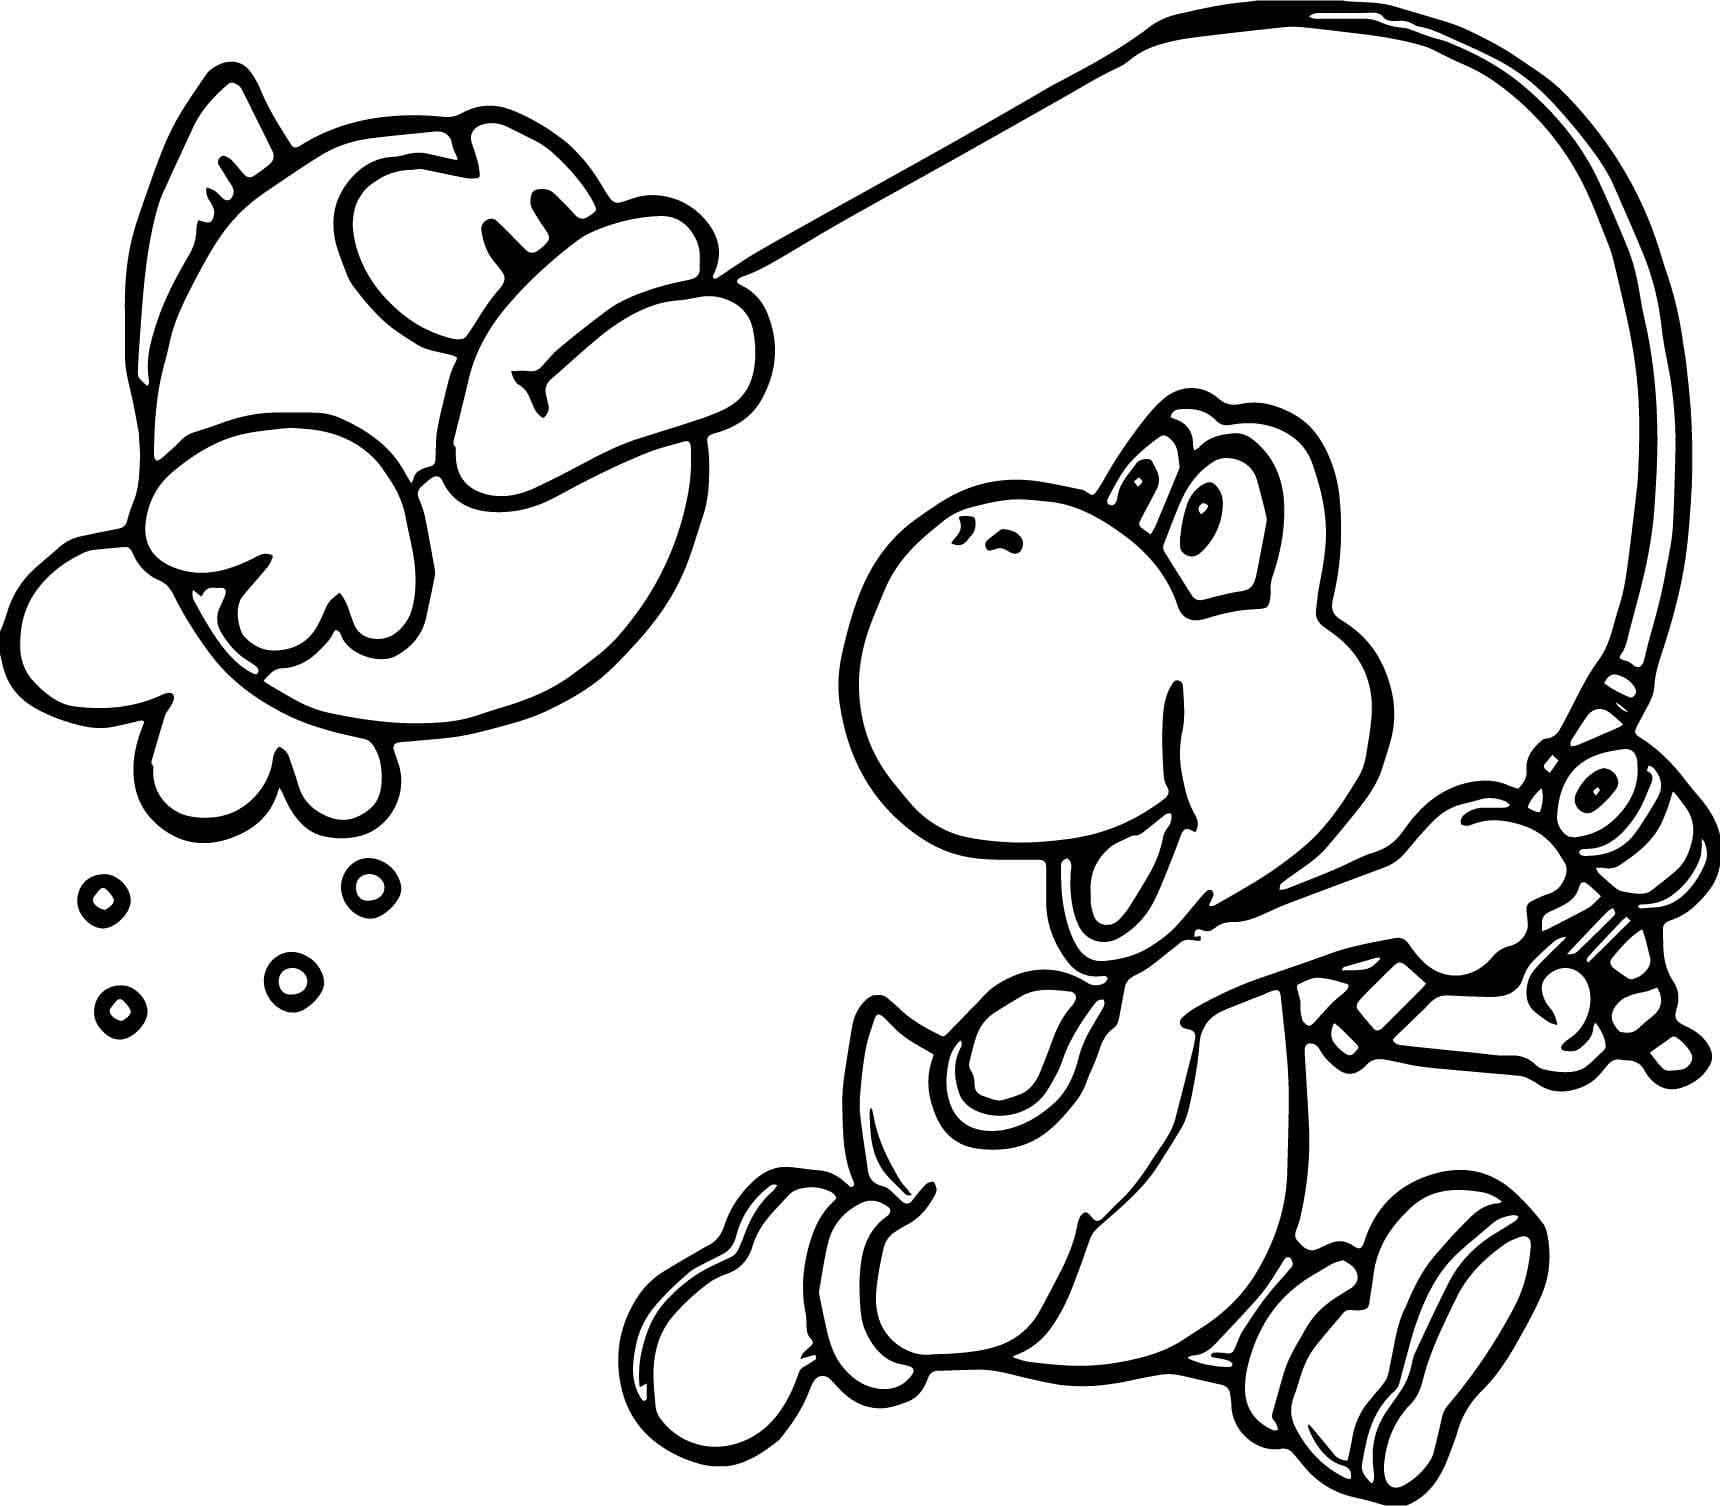 Snappy Yoshi imagem para colorir